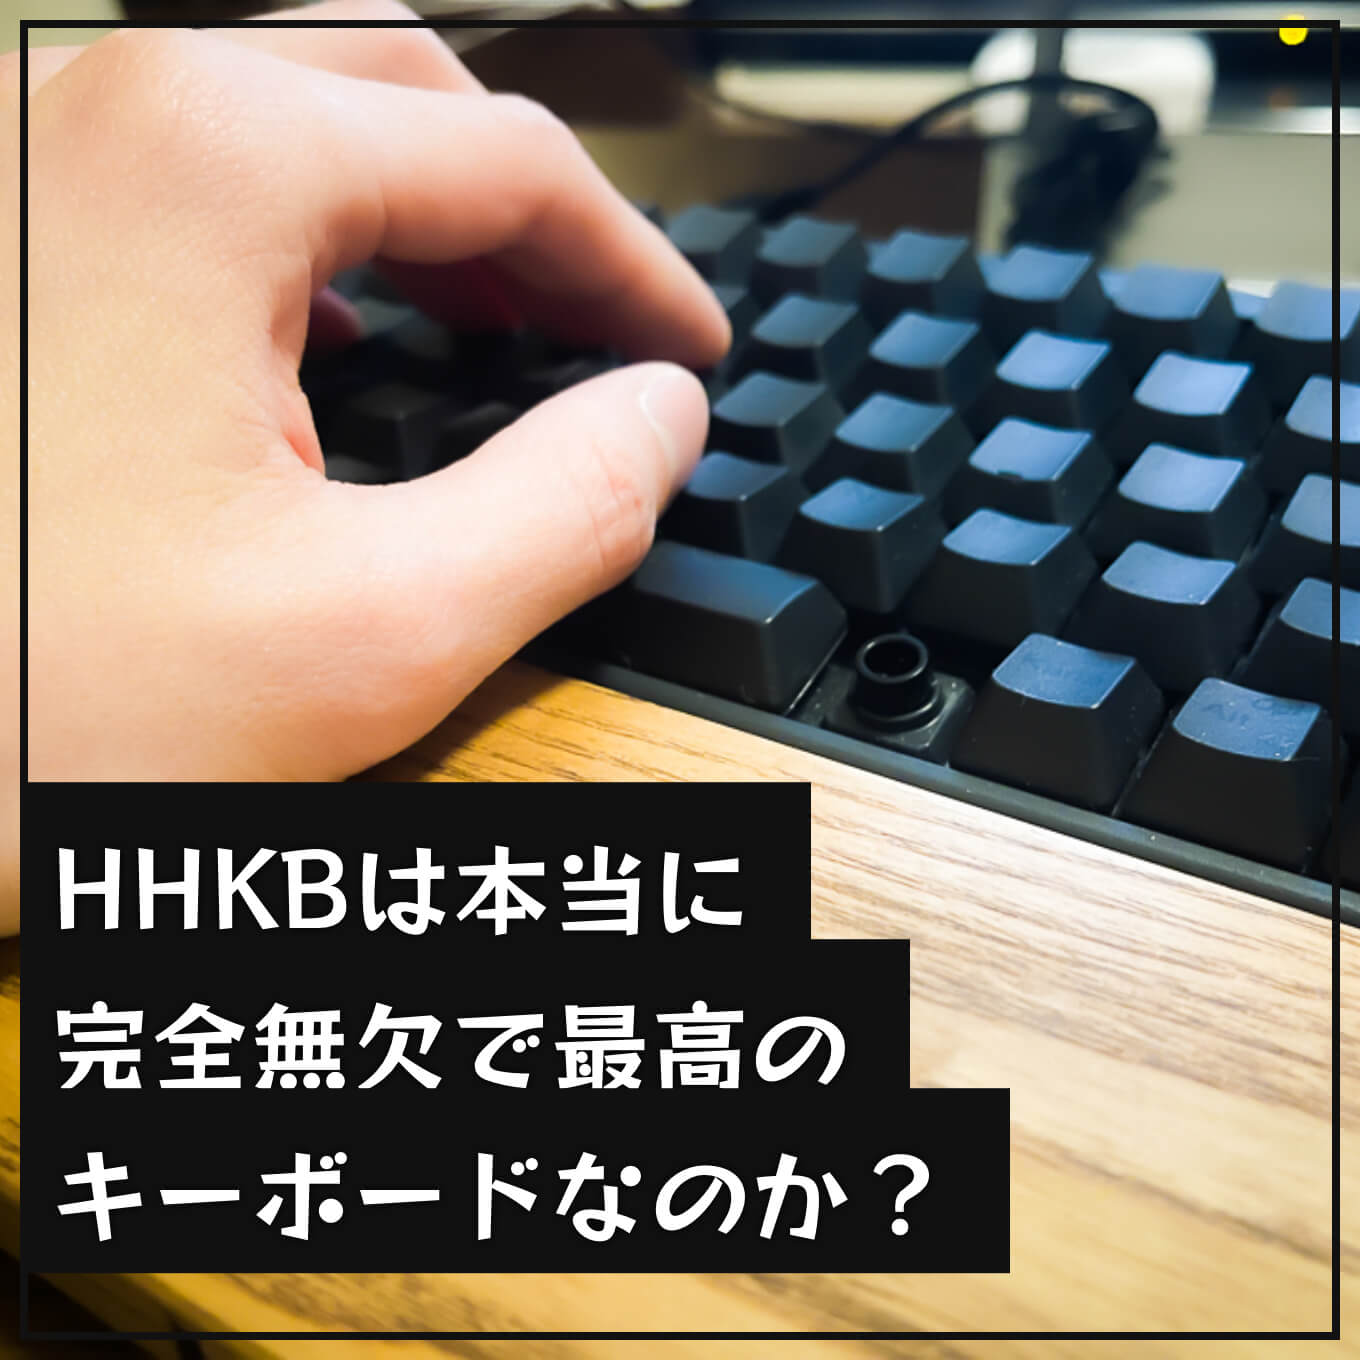 hhkb-negative